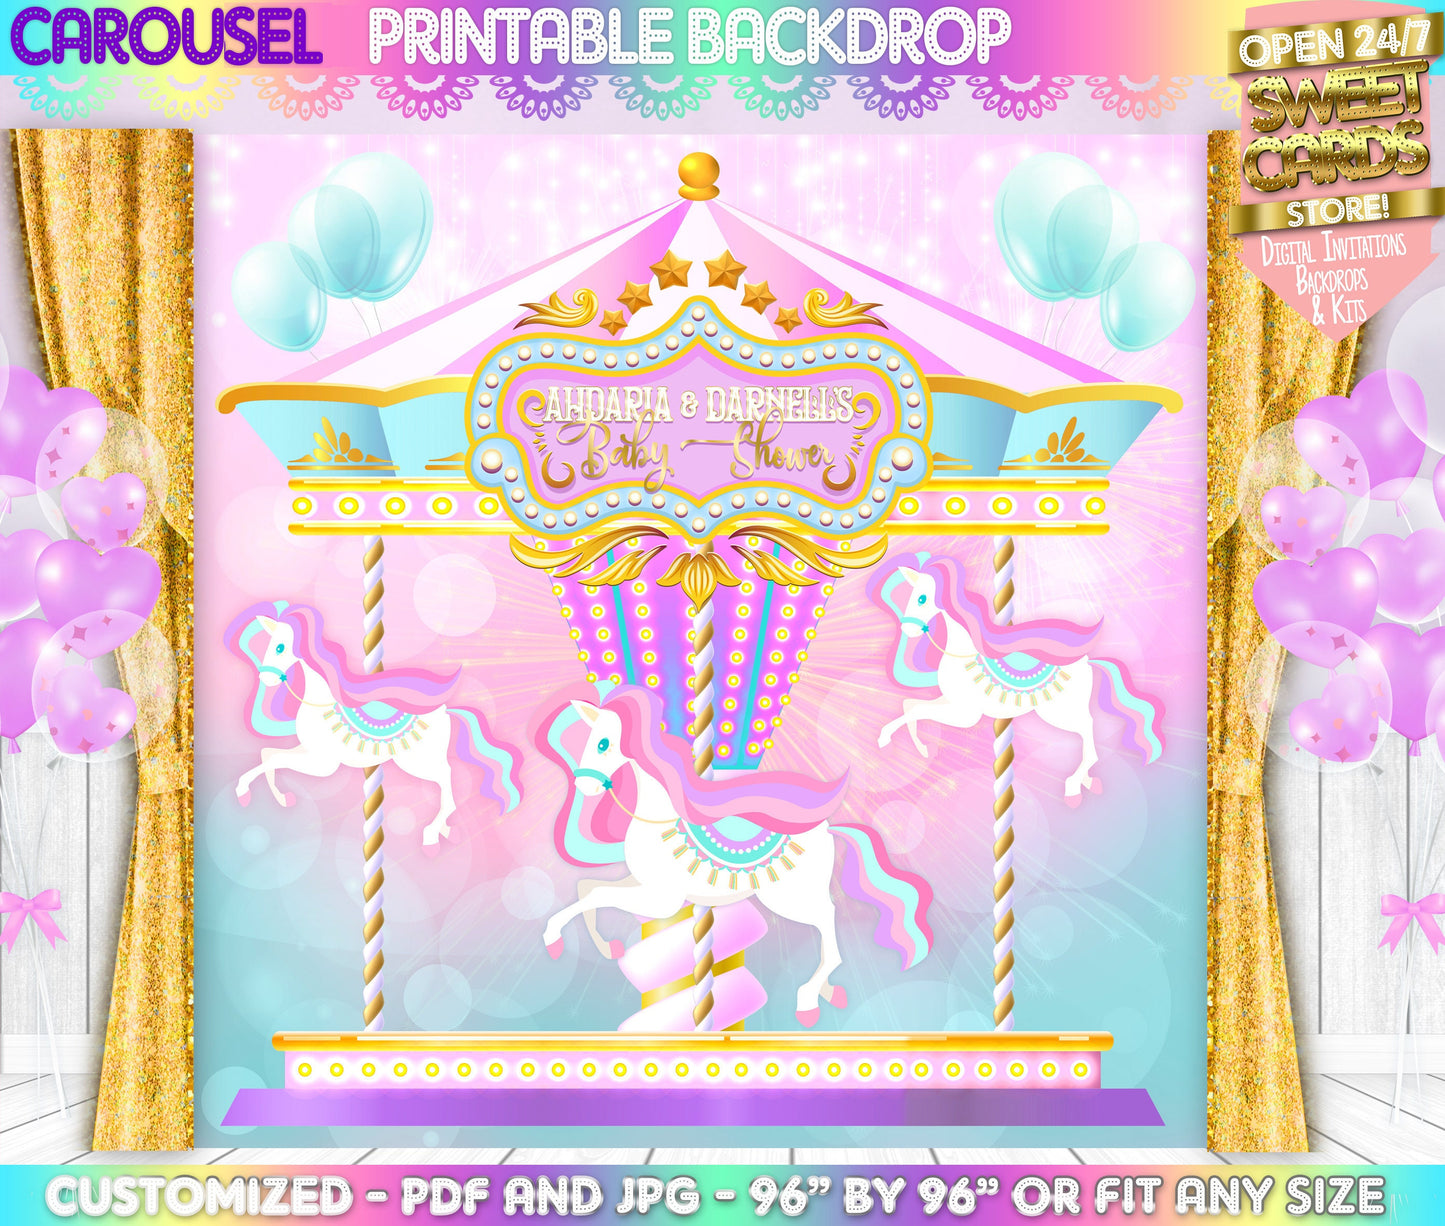 Carousel Printable Backdrop, Carousel Party Photo Backdrop, Carousel Party Background, Carousel Party Printable Banner, Carousel Party decor